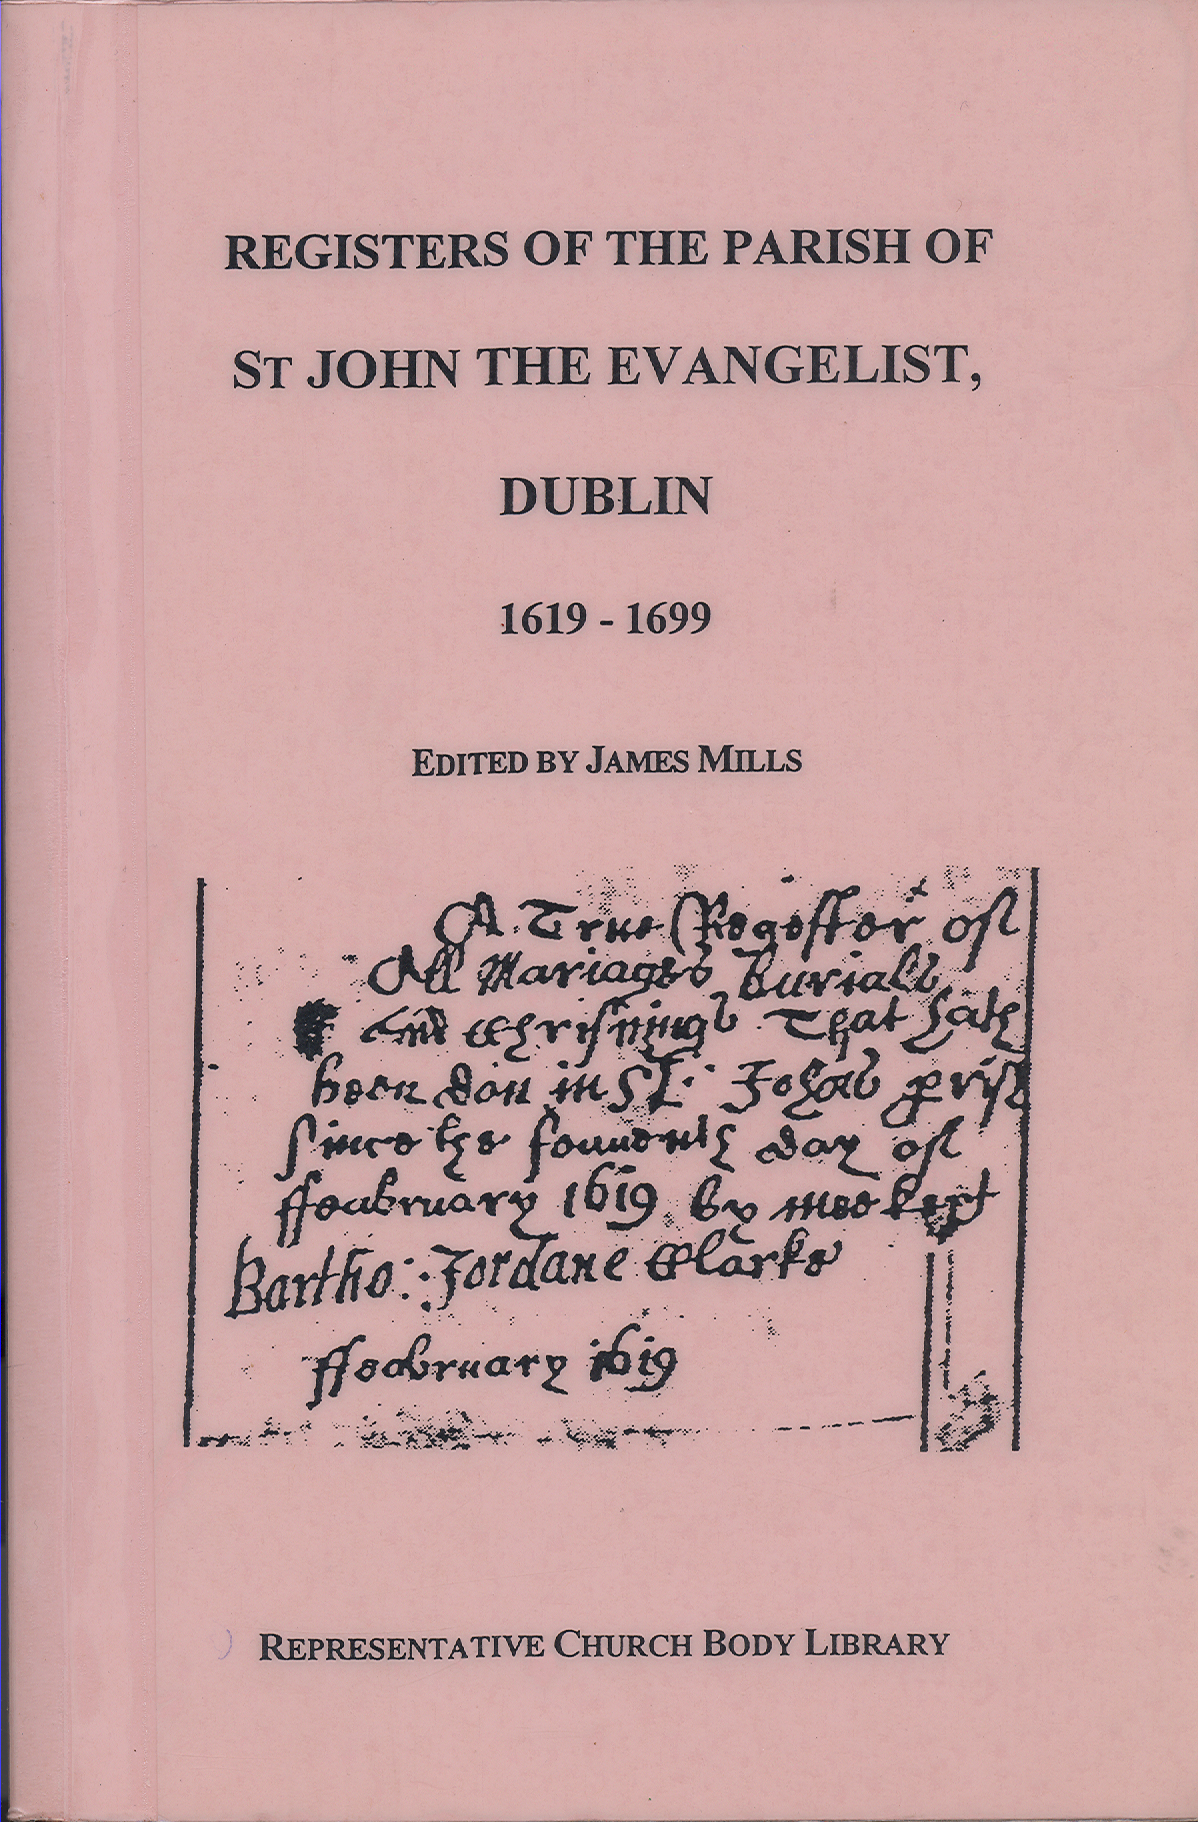 Registers of the Parish of St John the Evangelist, Dublin 1619-1699, edited by James Mills (Dublin: Representative Church Body Library, 2000).